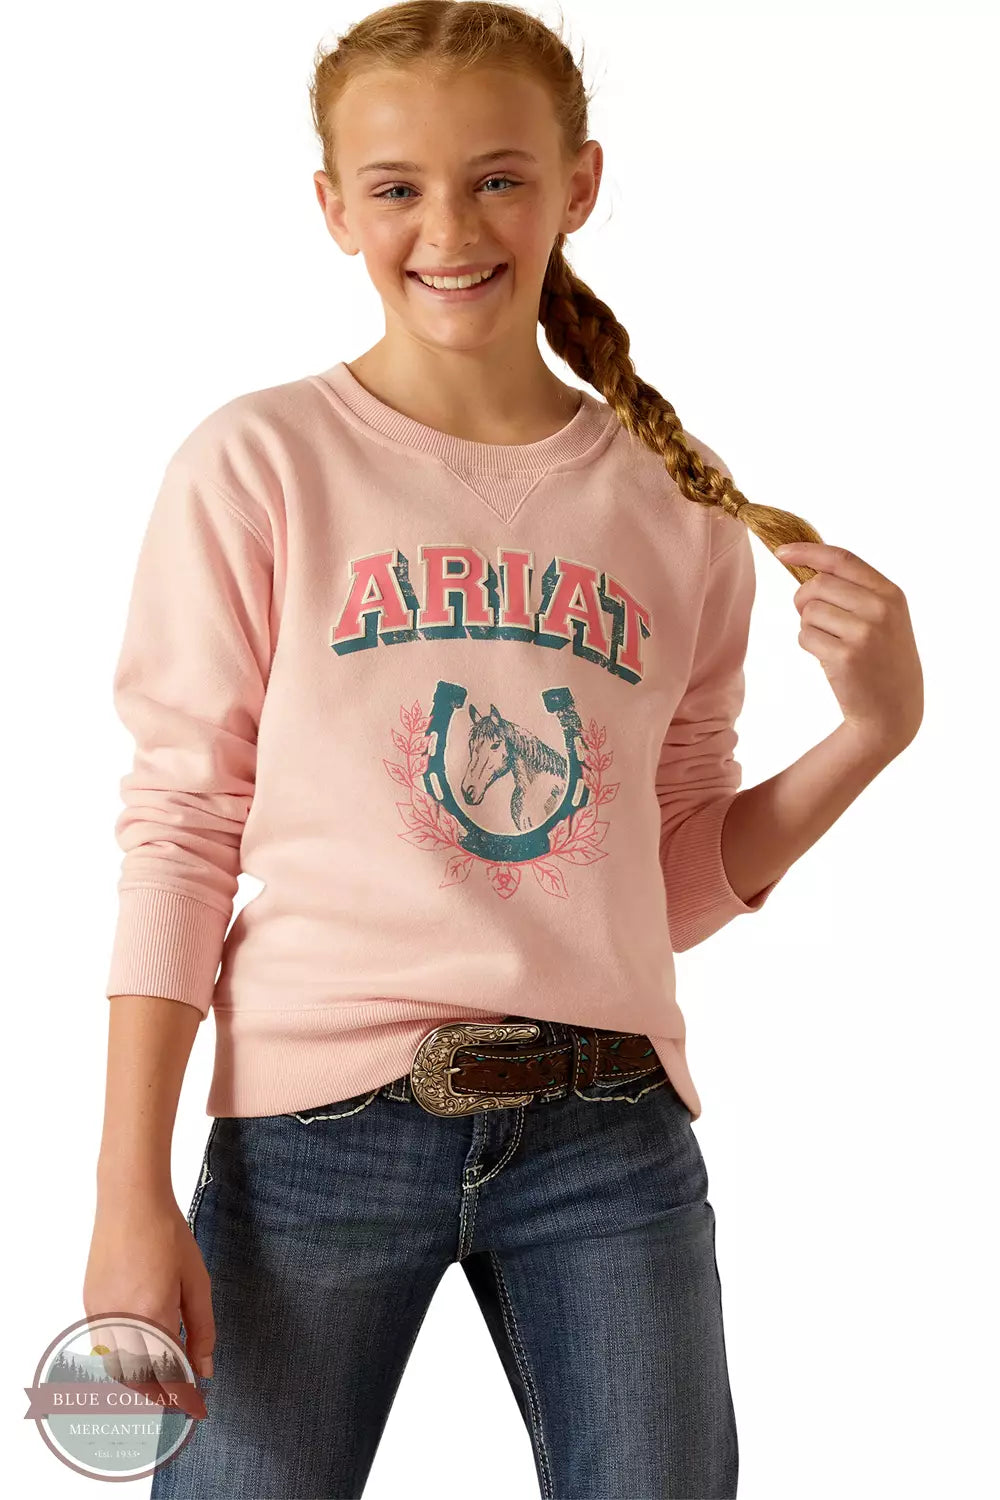 Ariat 10048587 College Sweatshirt in Blushing Rose Front View